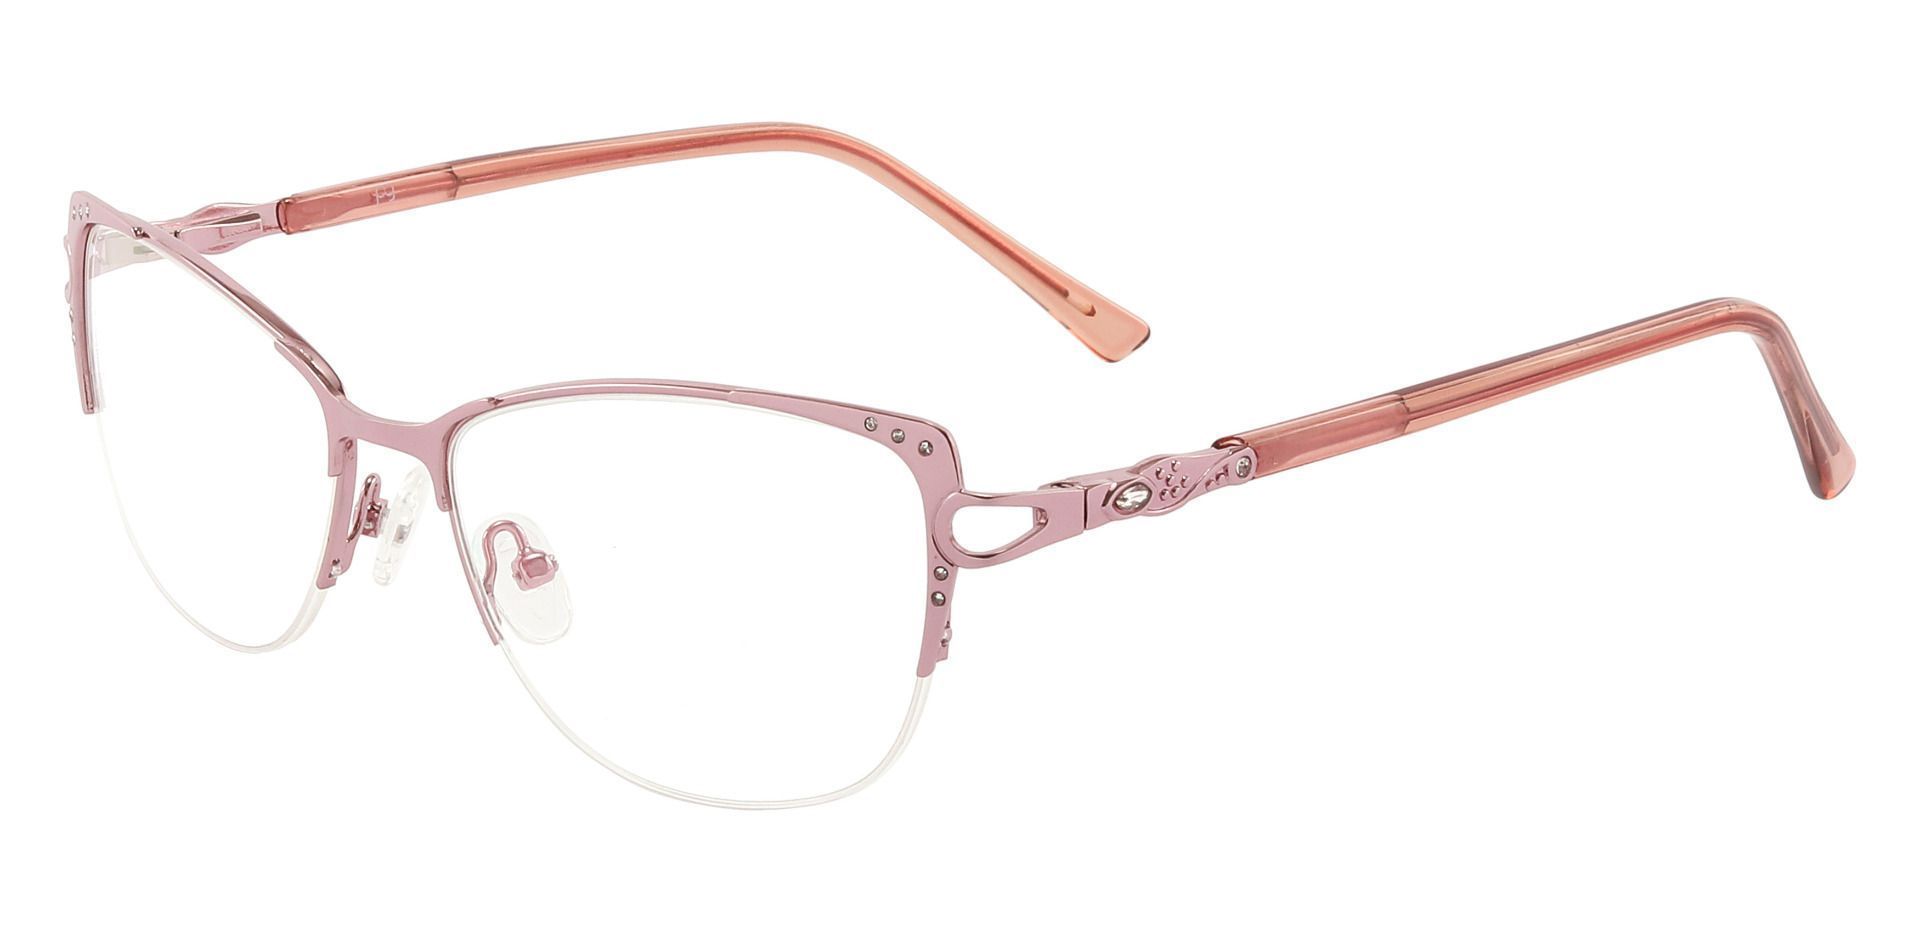 Granger Cat Eye Lined Bifocal Glasses - Pink